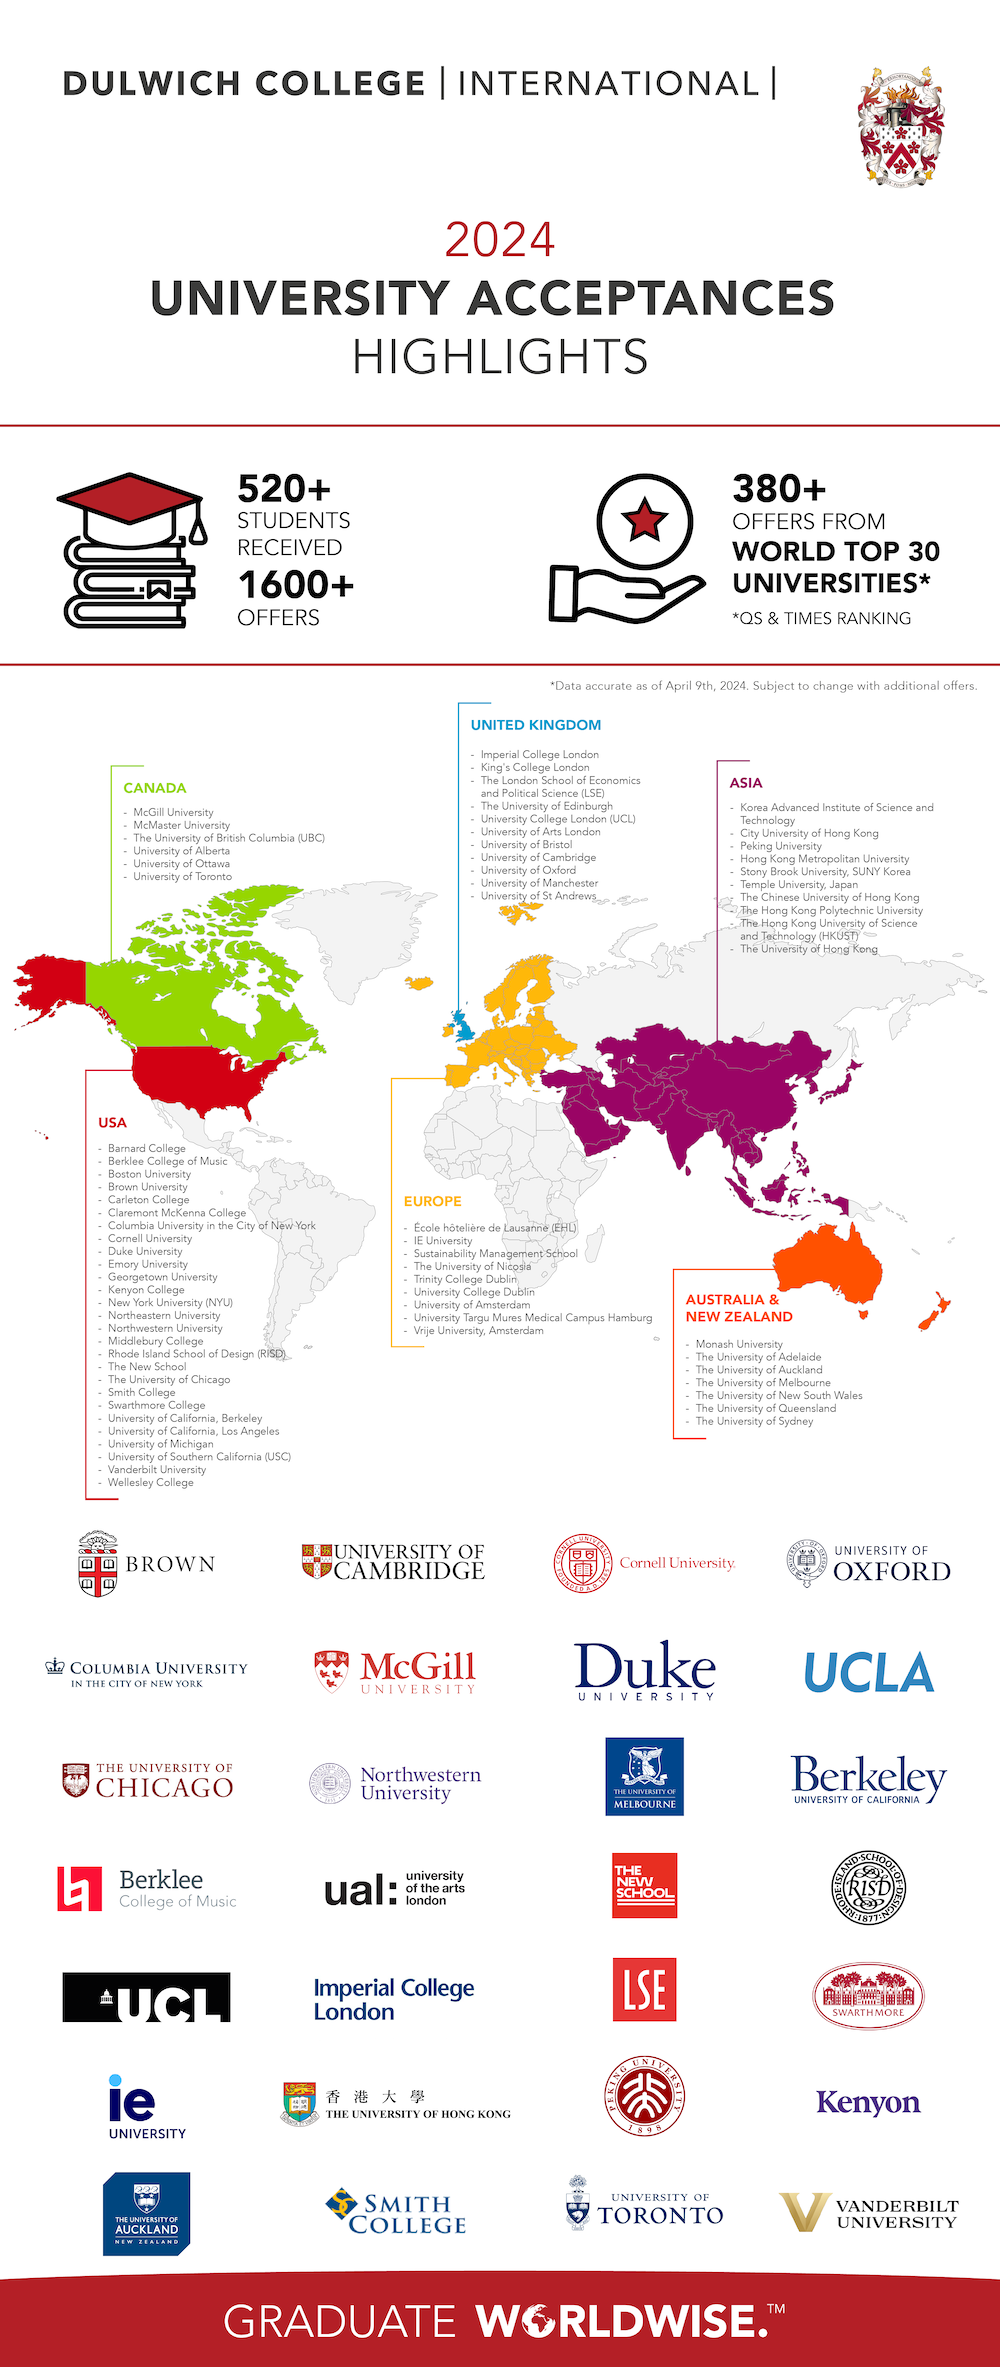 dci-2024-university-acceptances-highlights-map